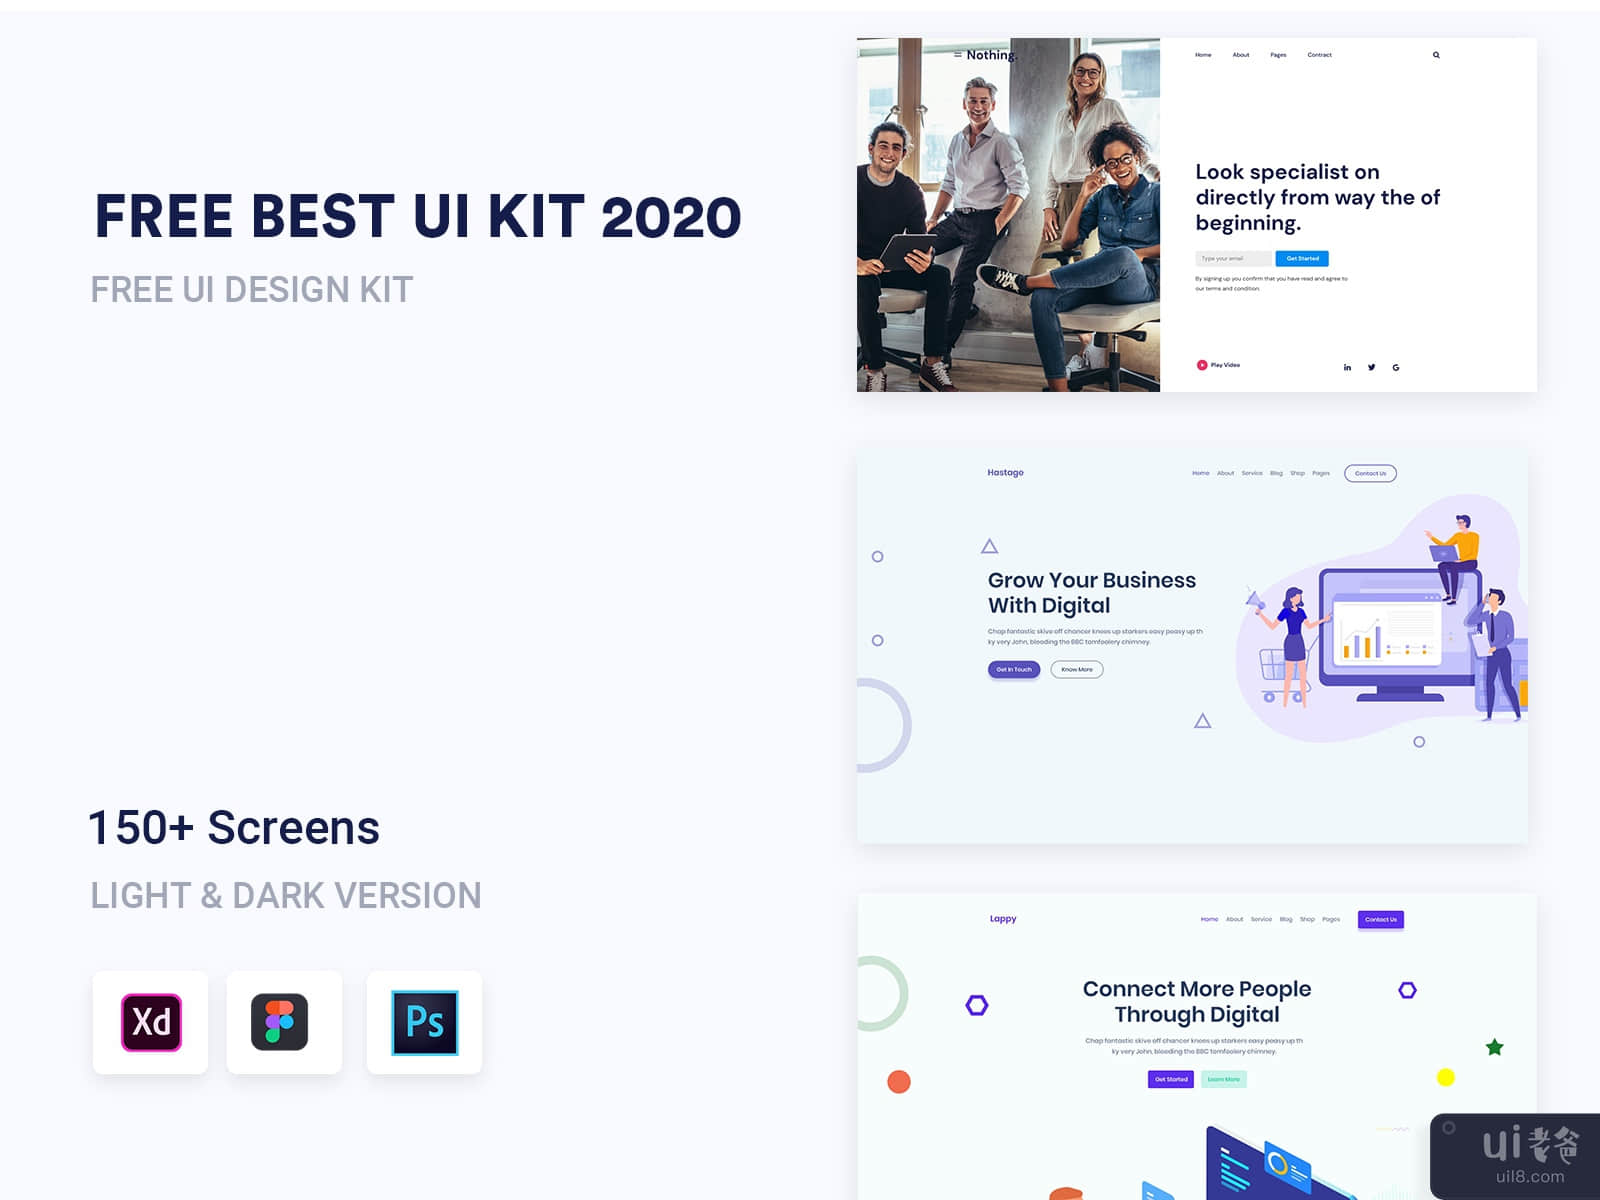 Free Best UI Kit 2020